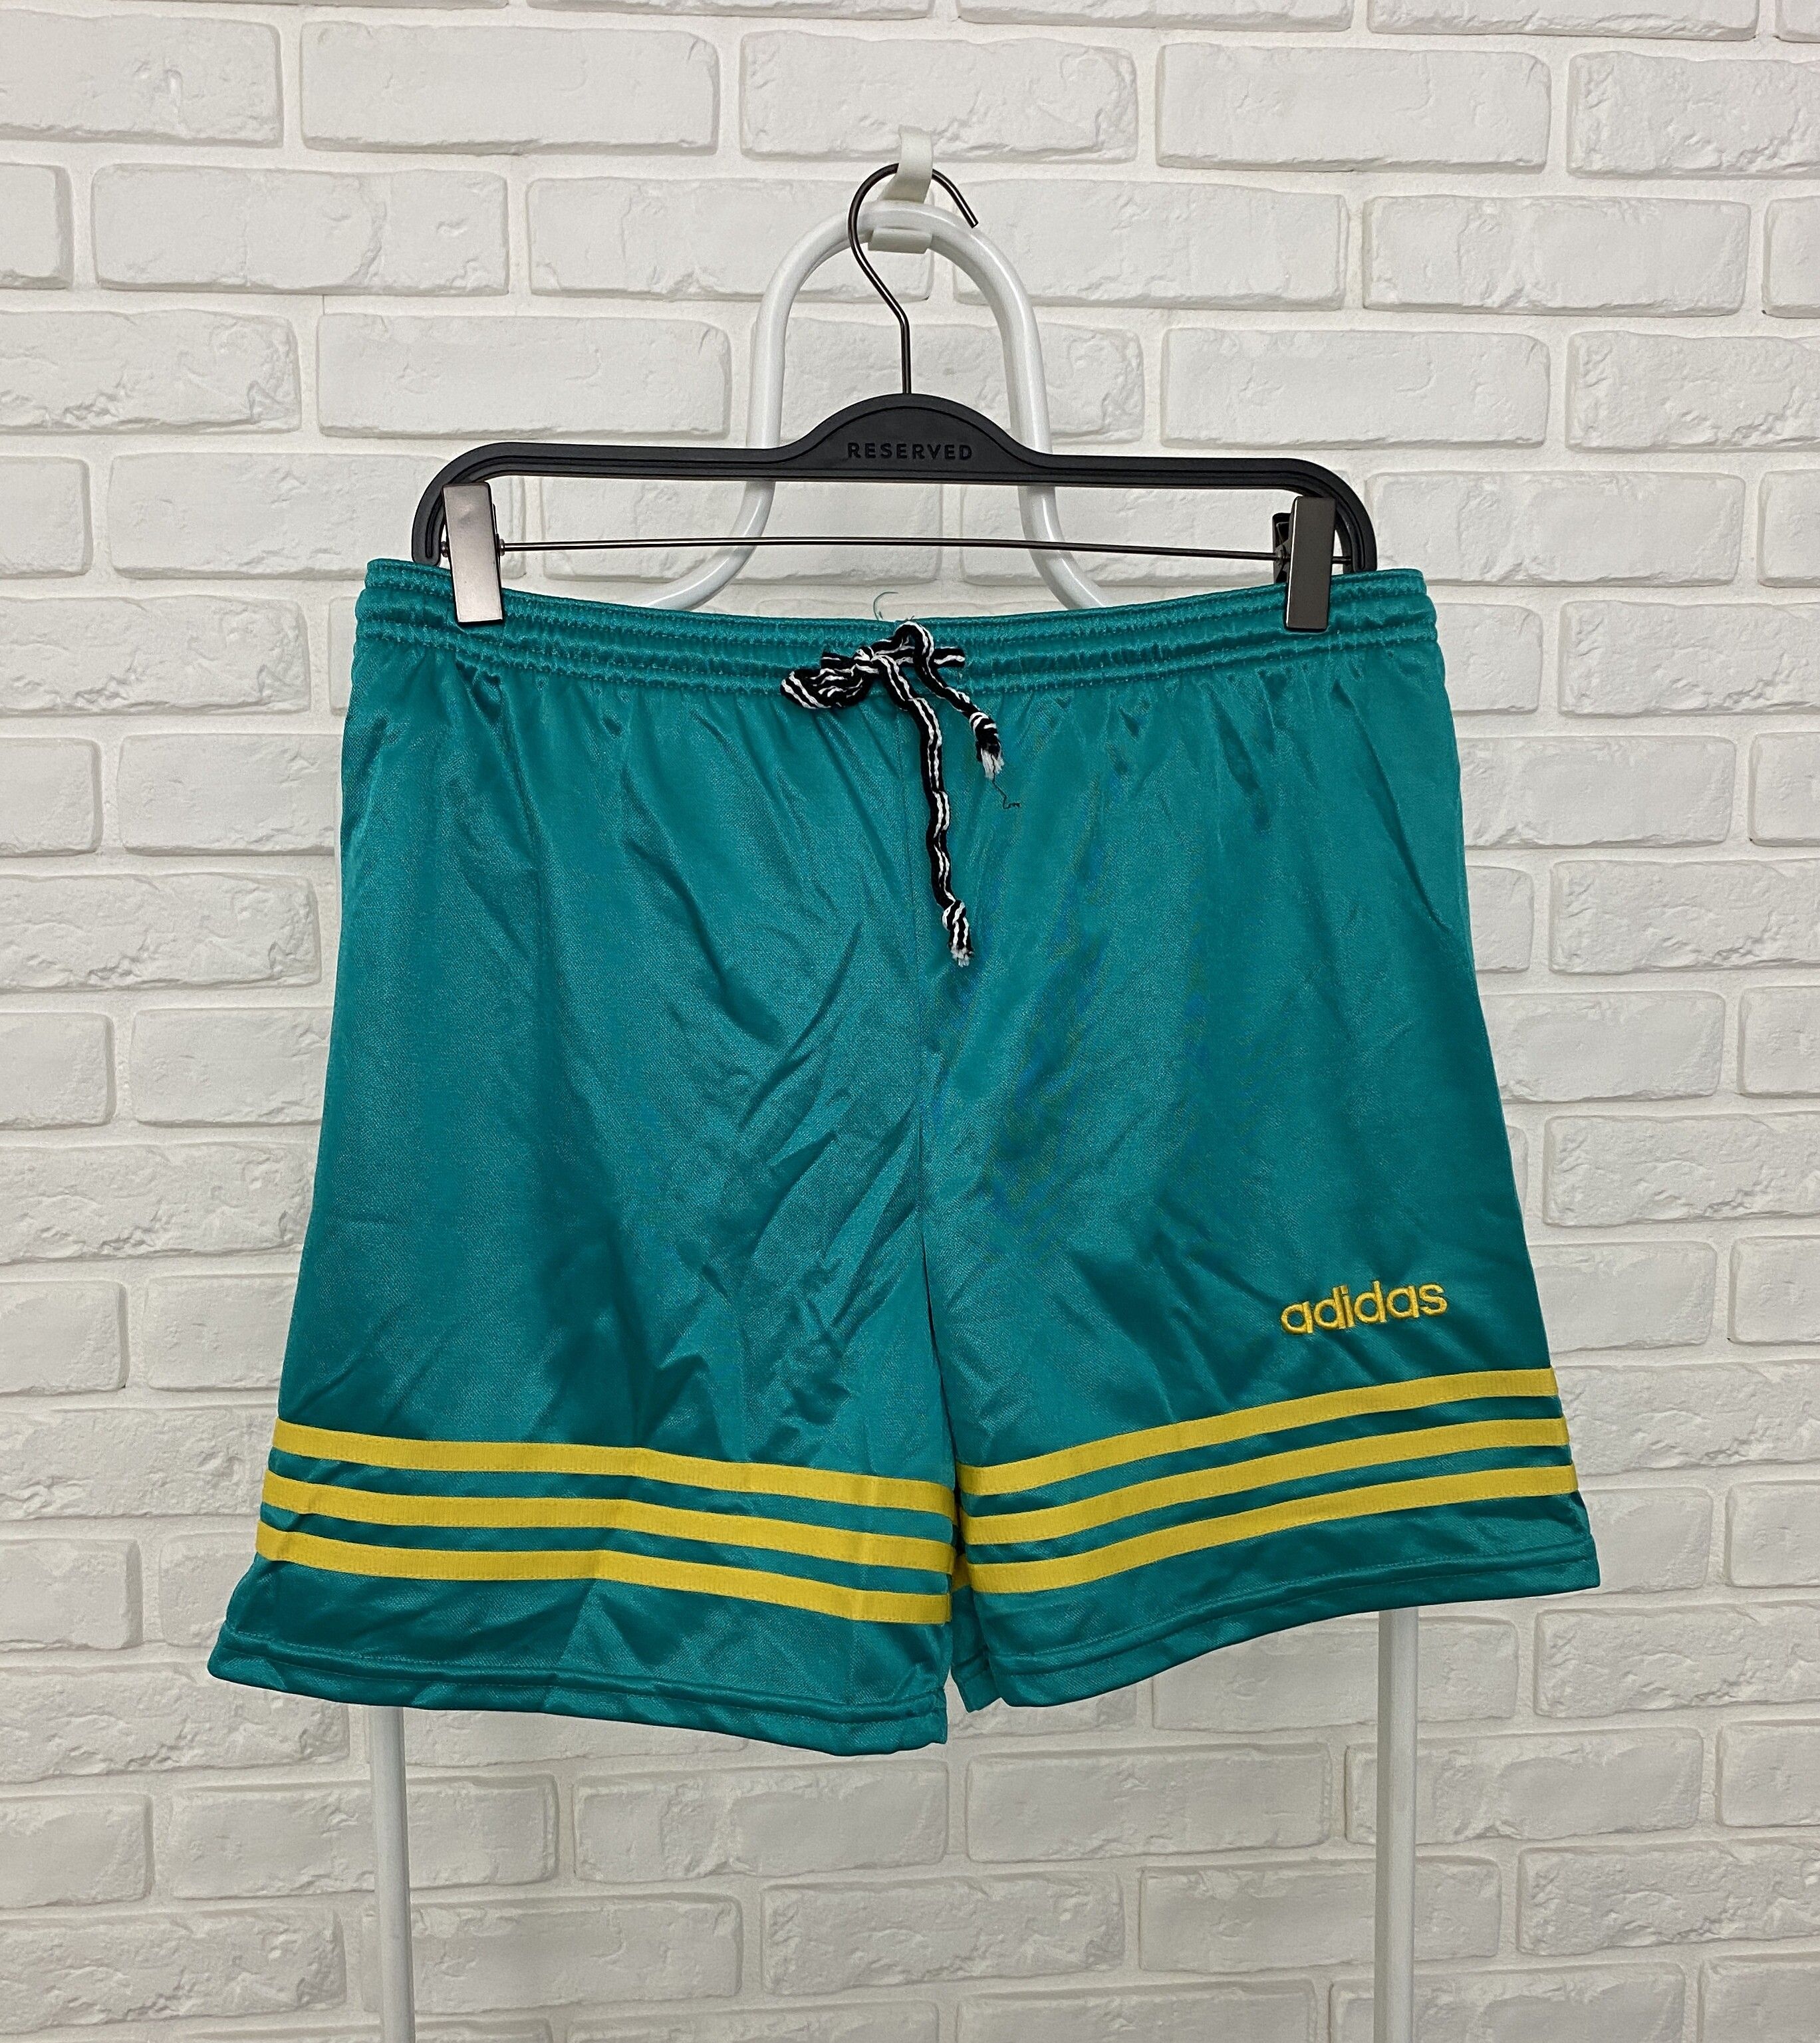 Adidas Retro Adidas 90s Nylon Shorts Soccer Size M Small Logo Size US 32 / EU 48 - 1 Preview